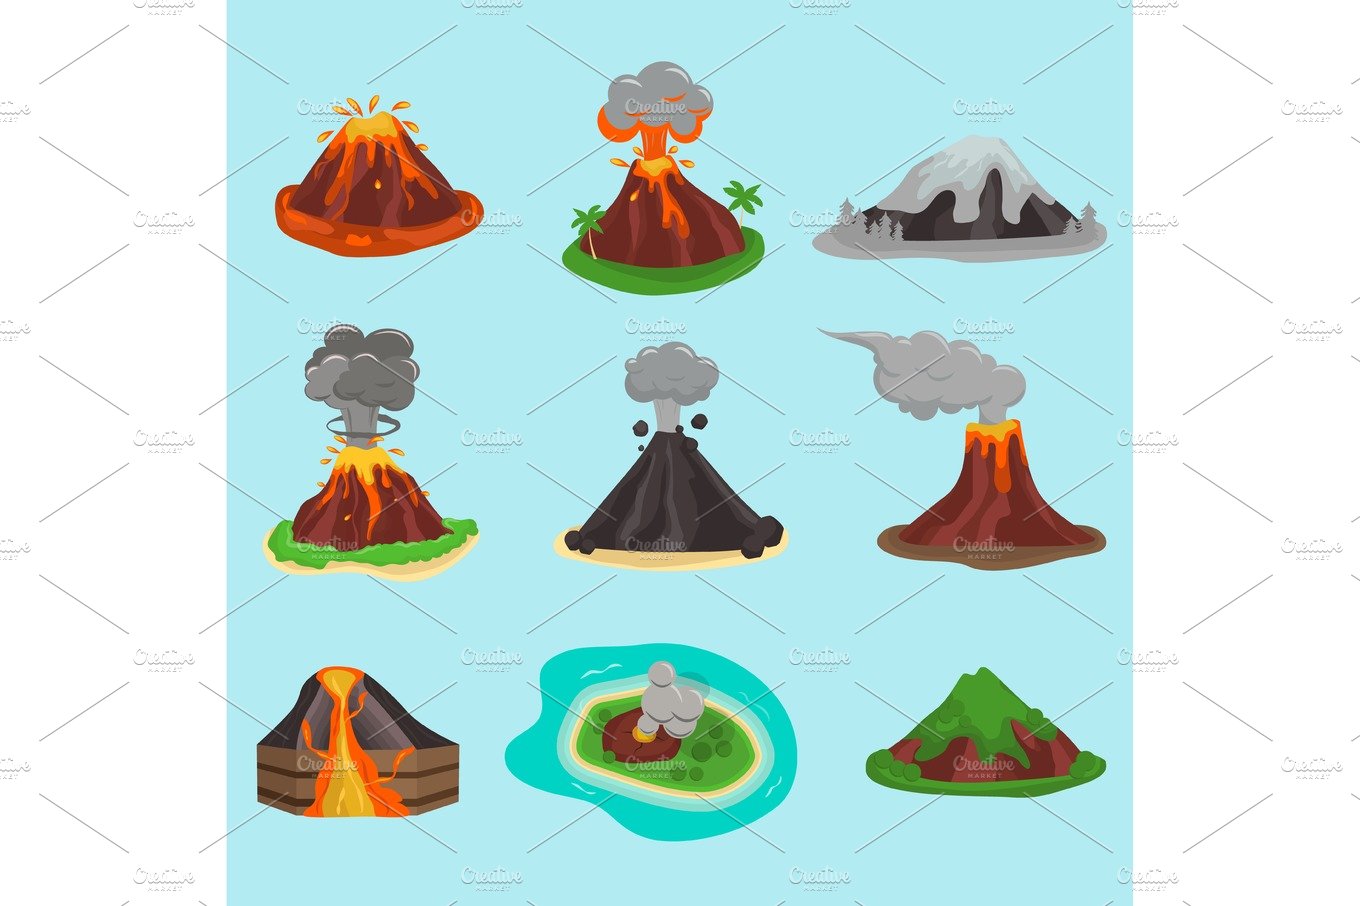 Volcano set vector illustration. cover image.